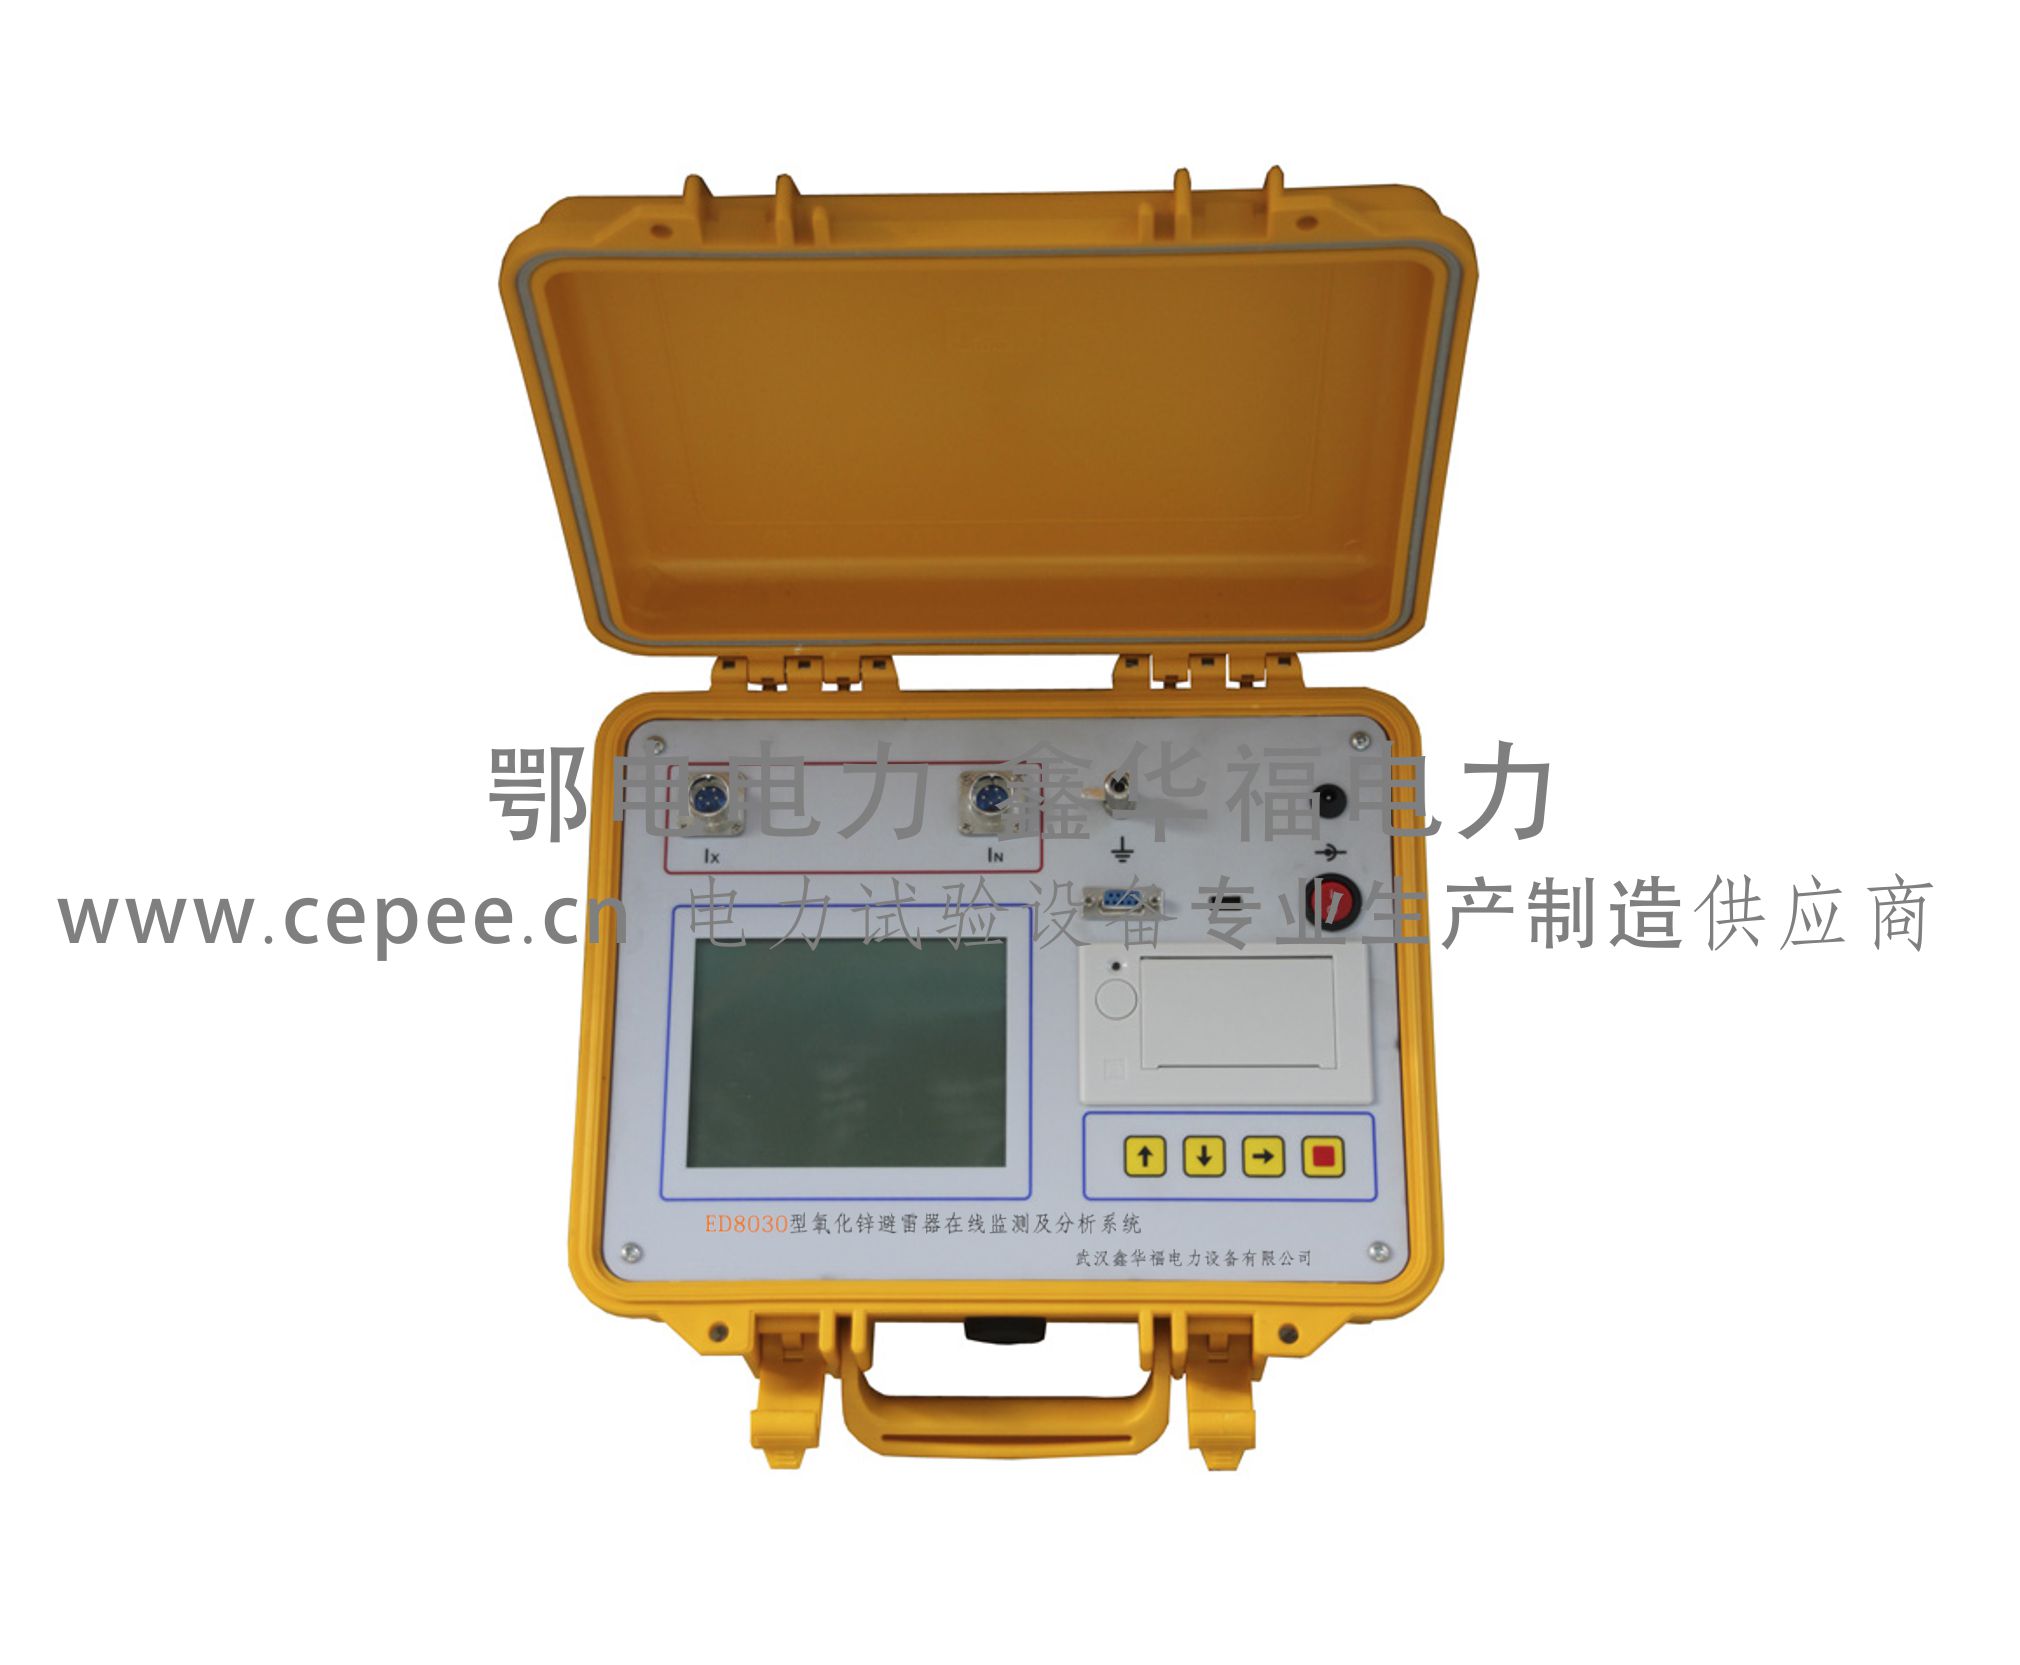 ED8030型氧化锌避雷器在线监测及分析系统